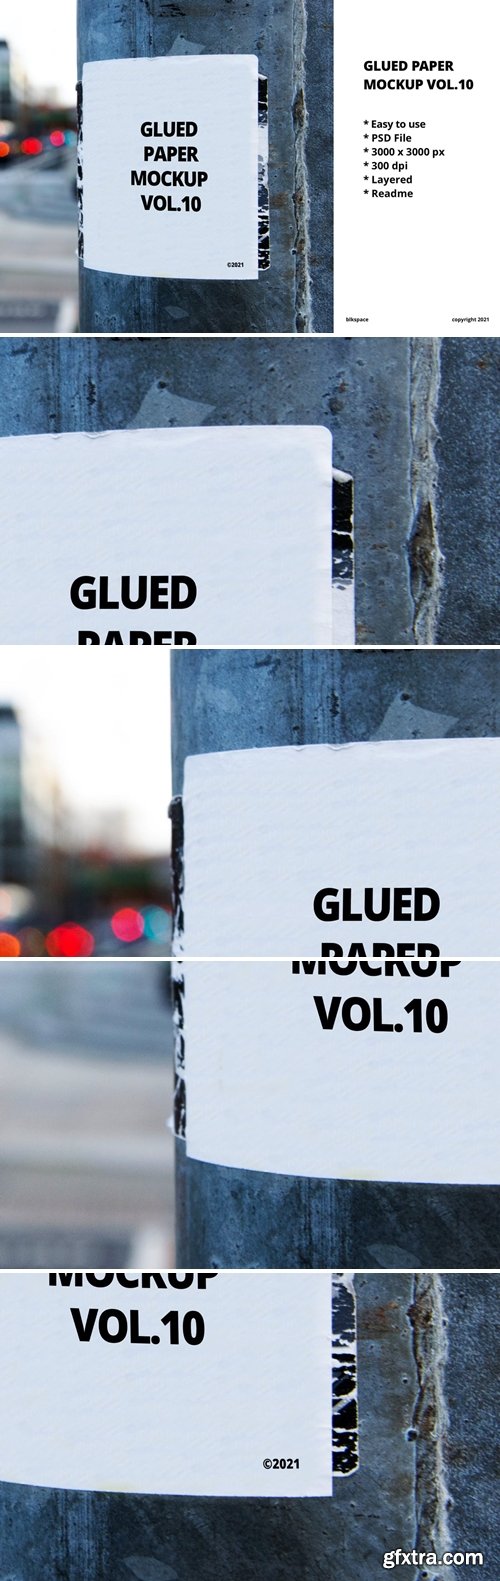 Glued Paper Mockup Vol.10